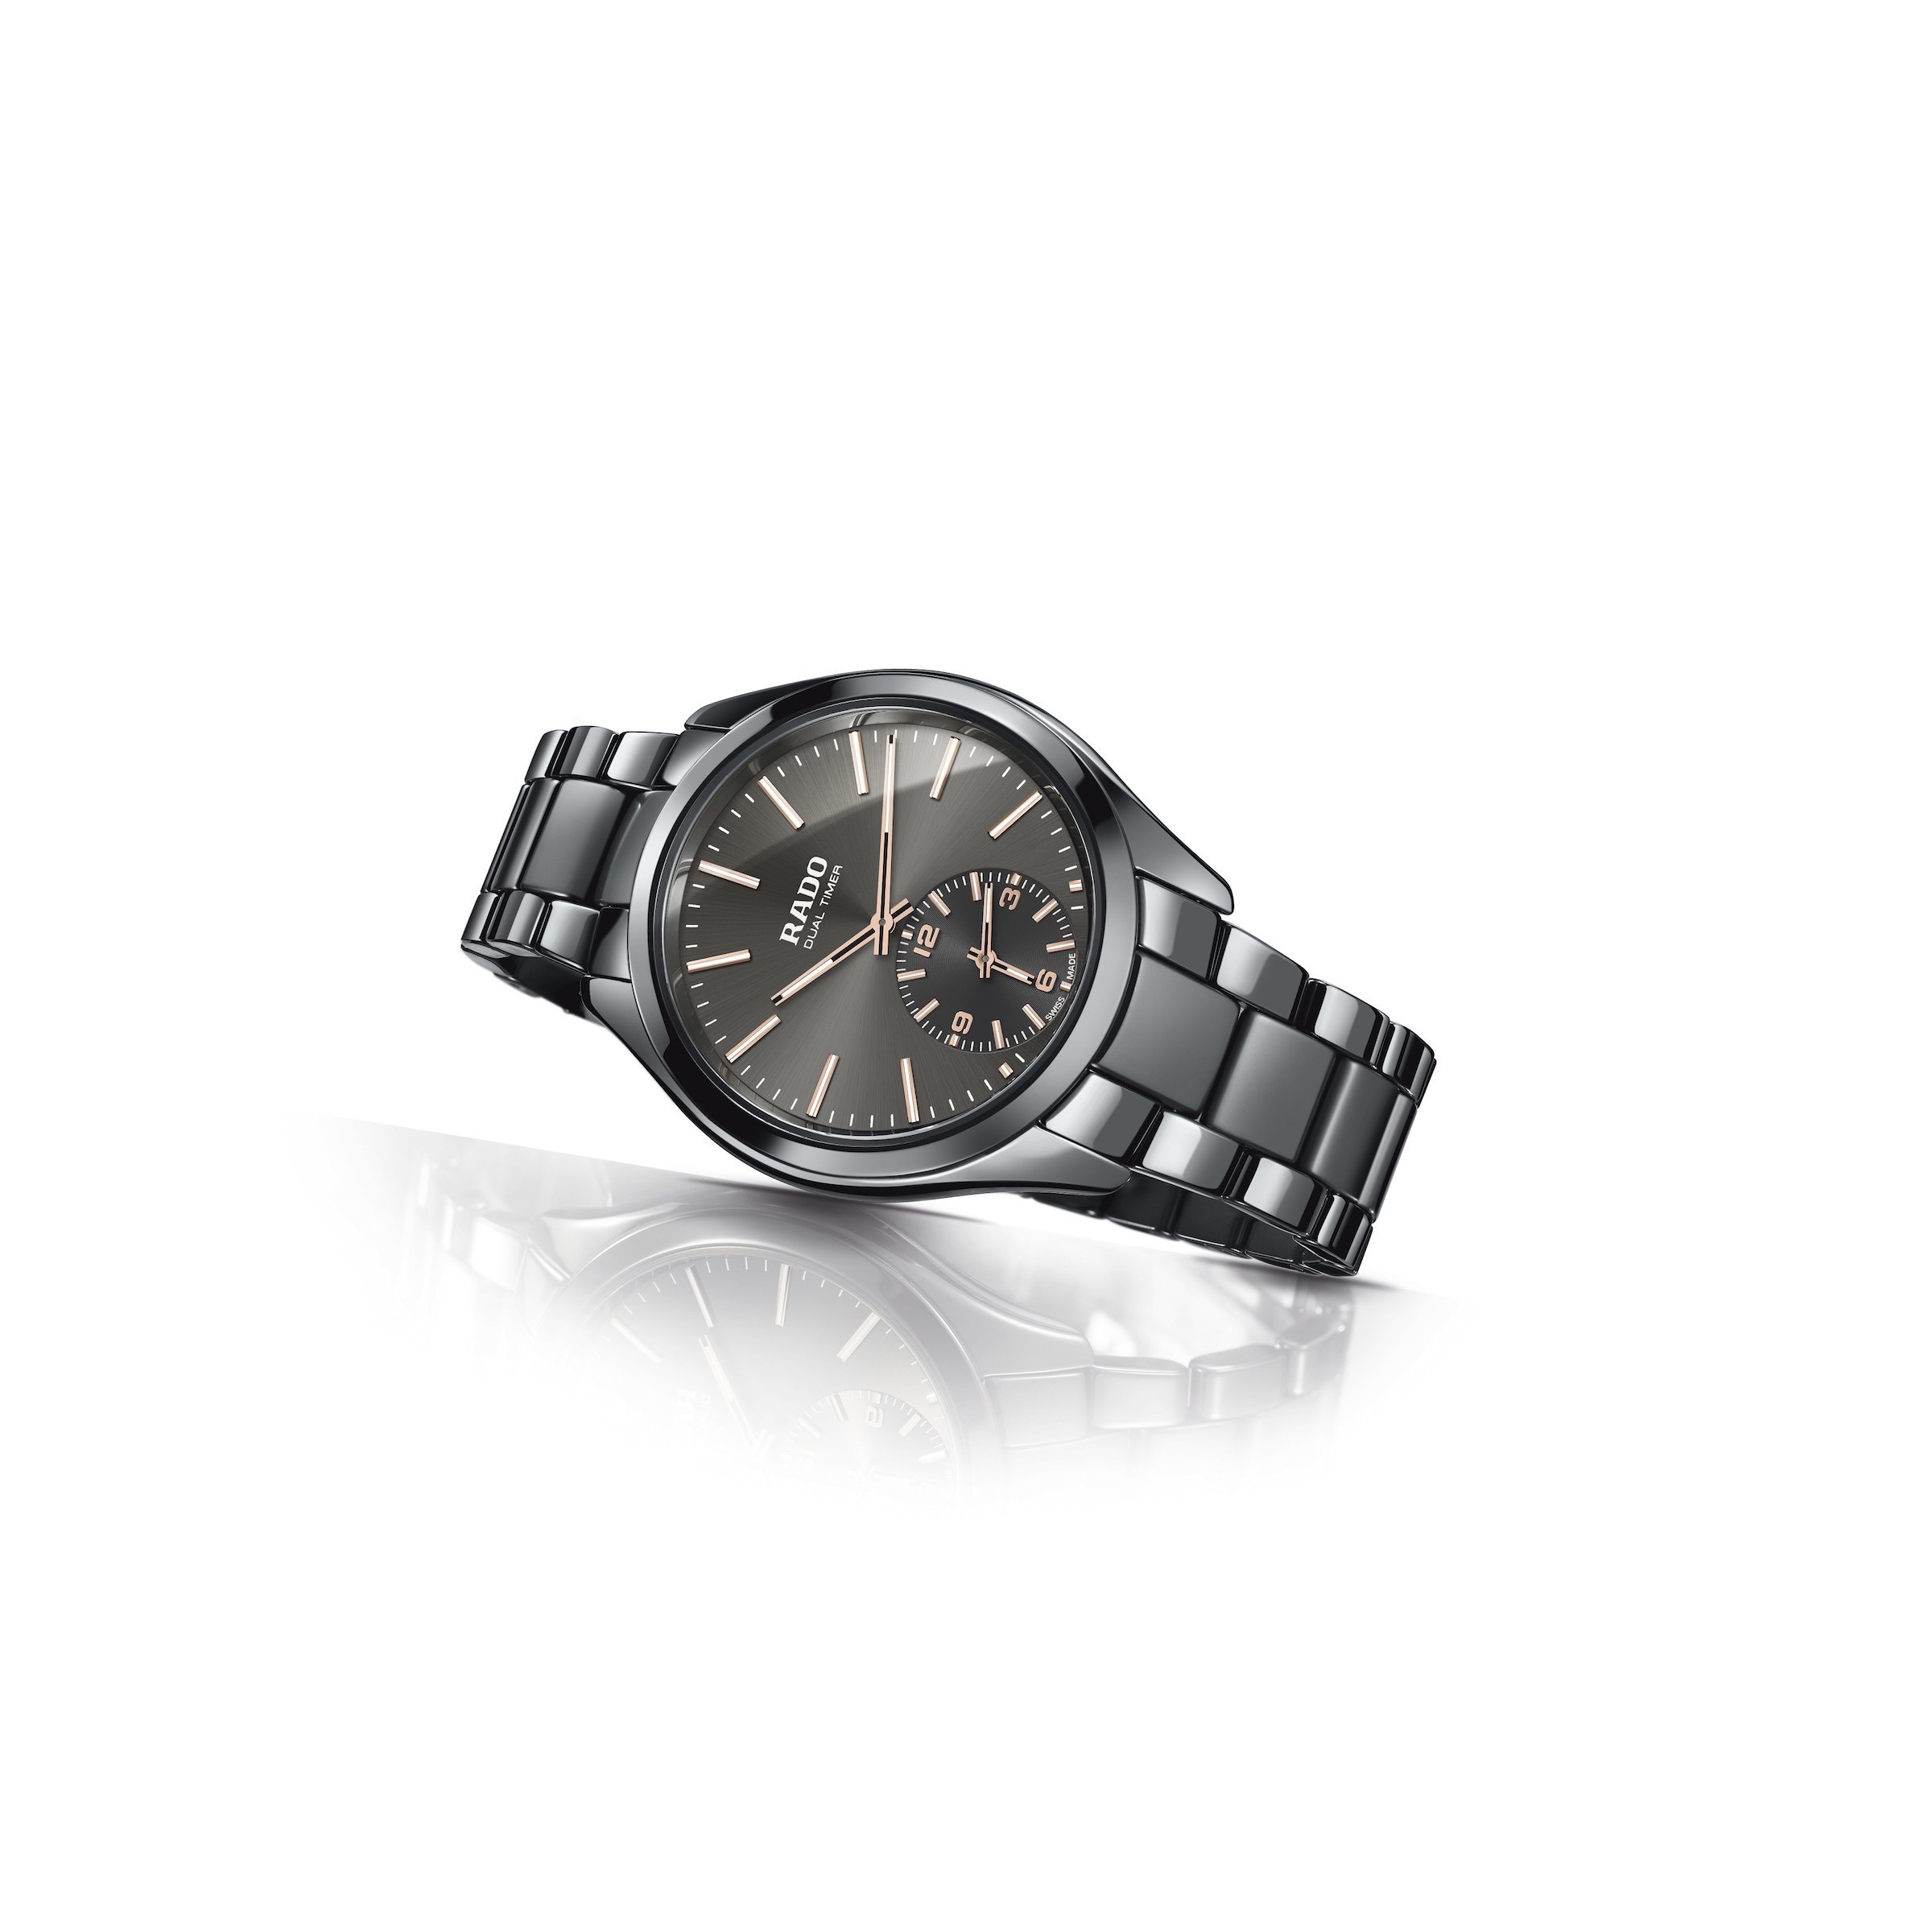 El reloj Rado HyperChrome Ceramic Touch Dual Timer obtiene el premio Good Design Award